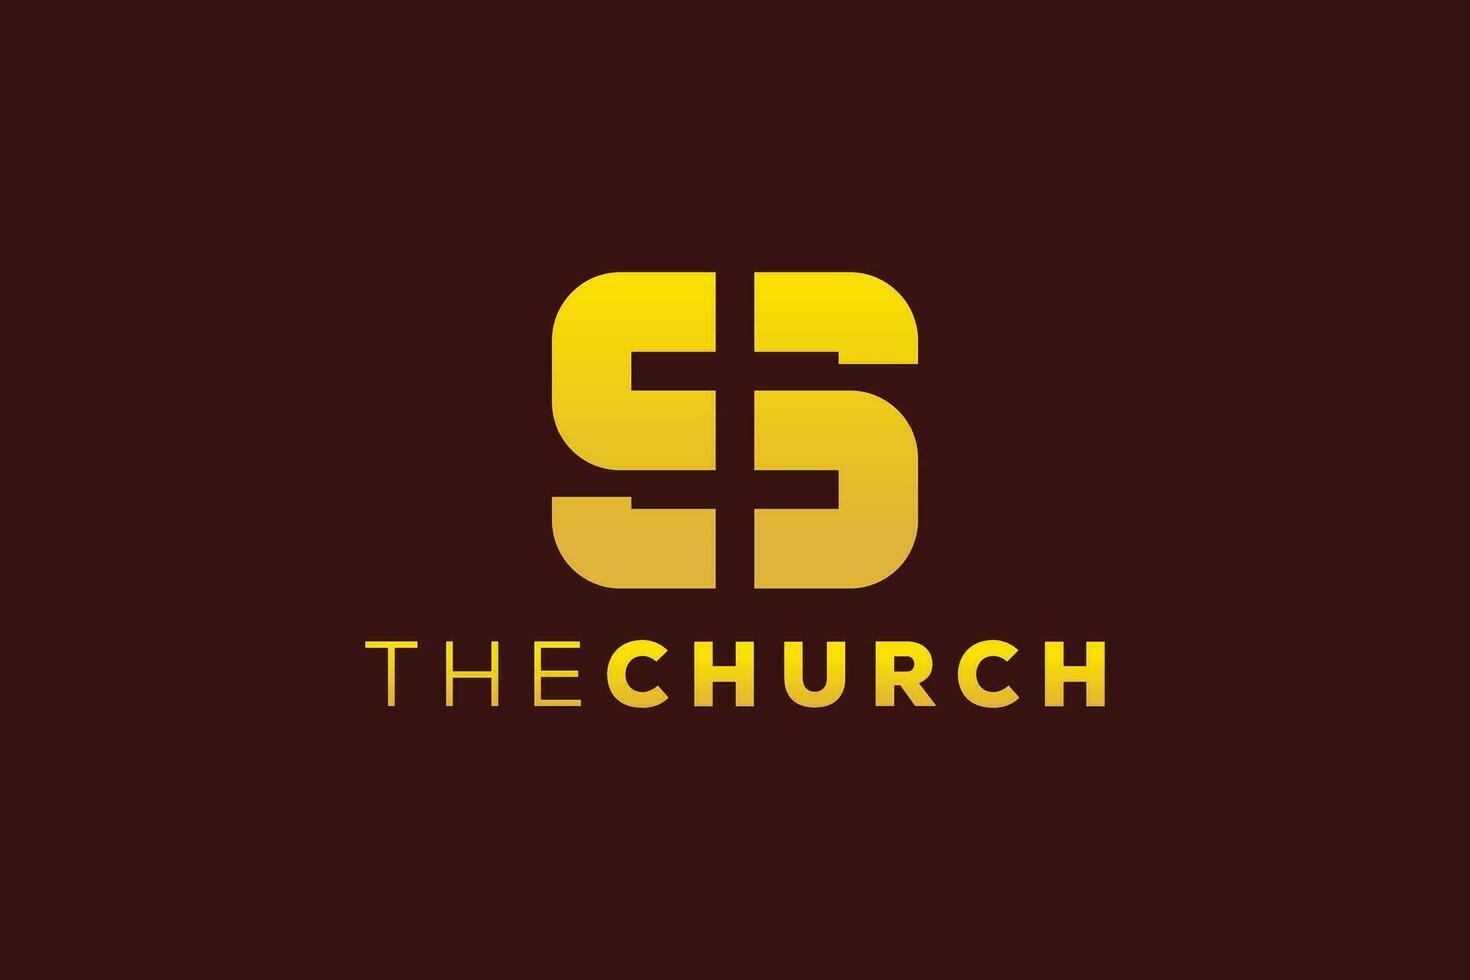 de moda y profesional letra s Iglesia firmar cristiano y pacífico vector logo diseño modelo